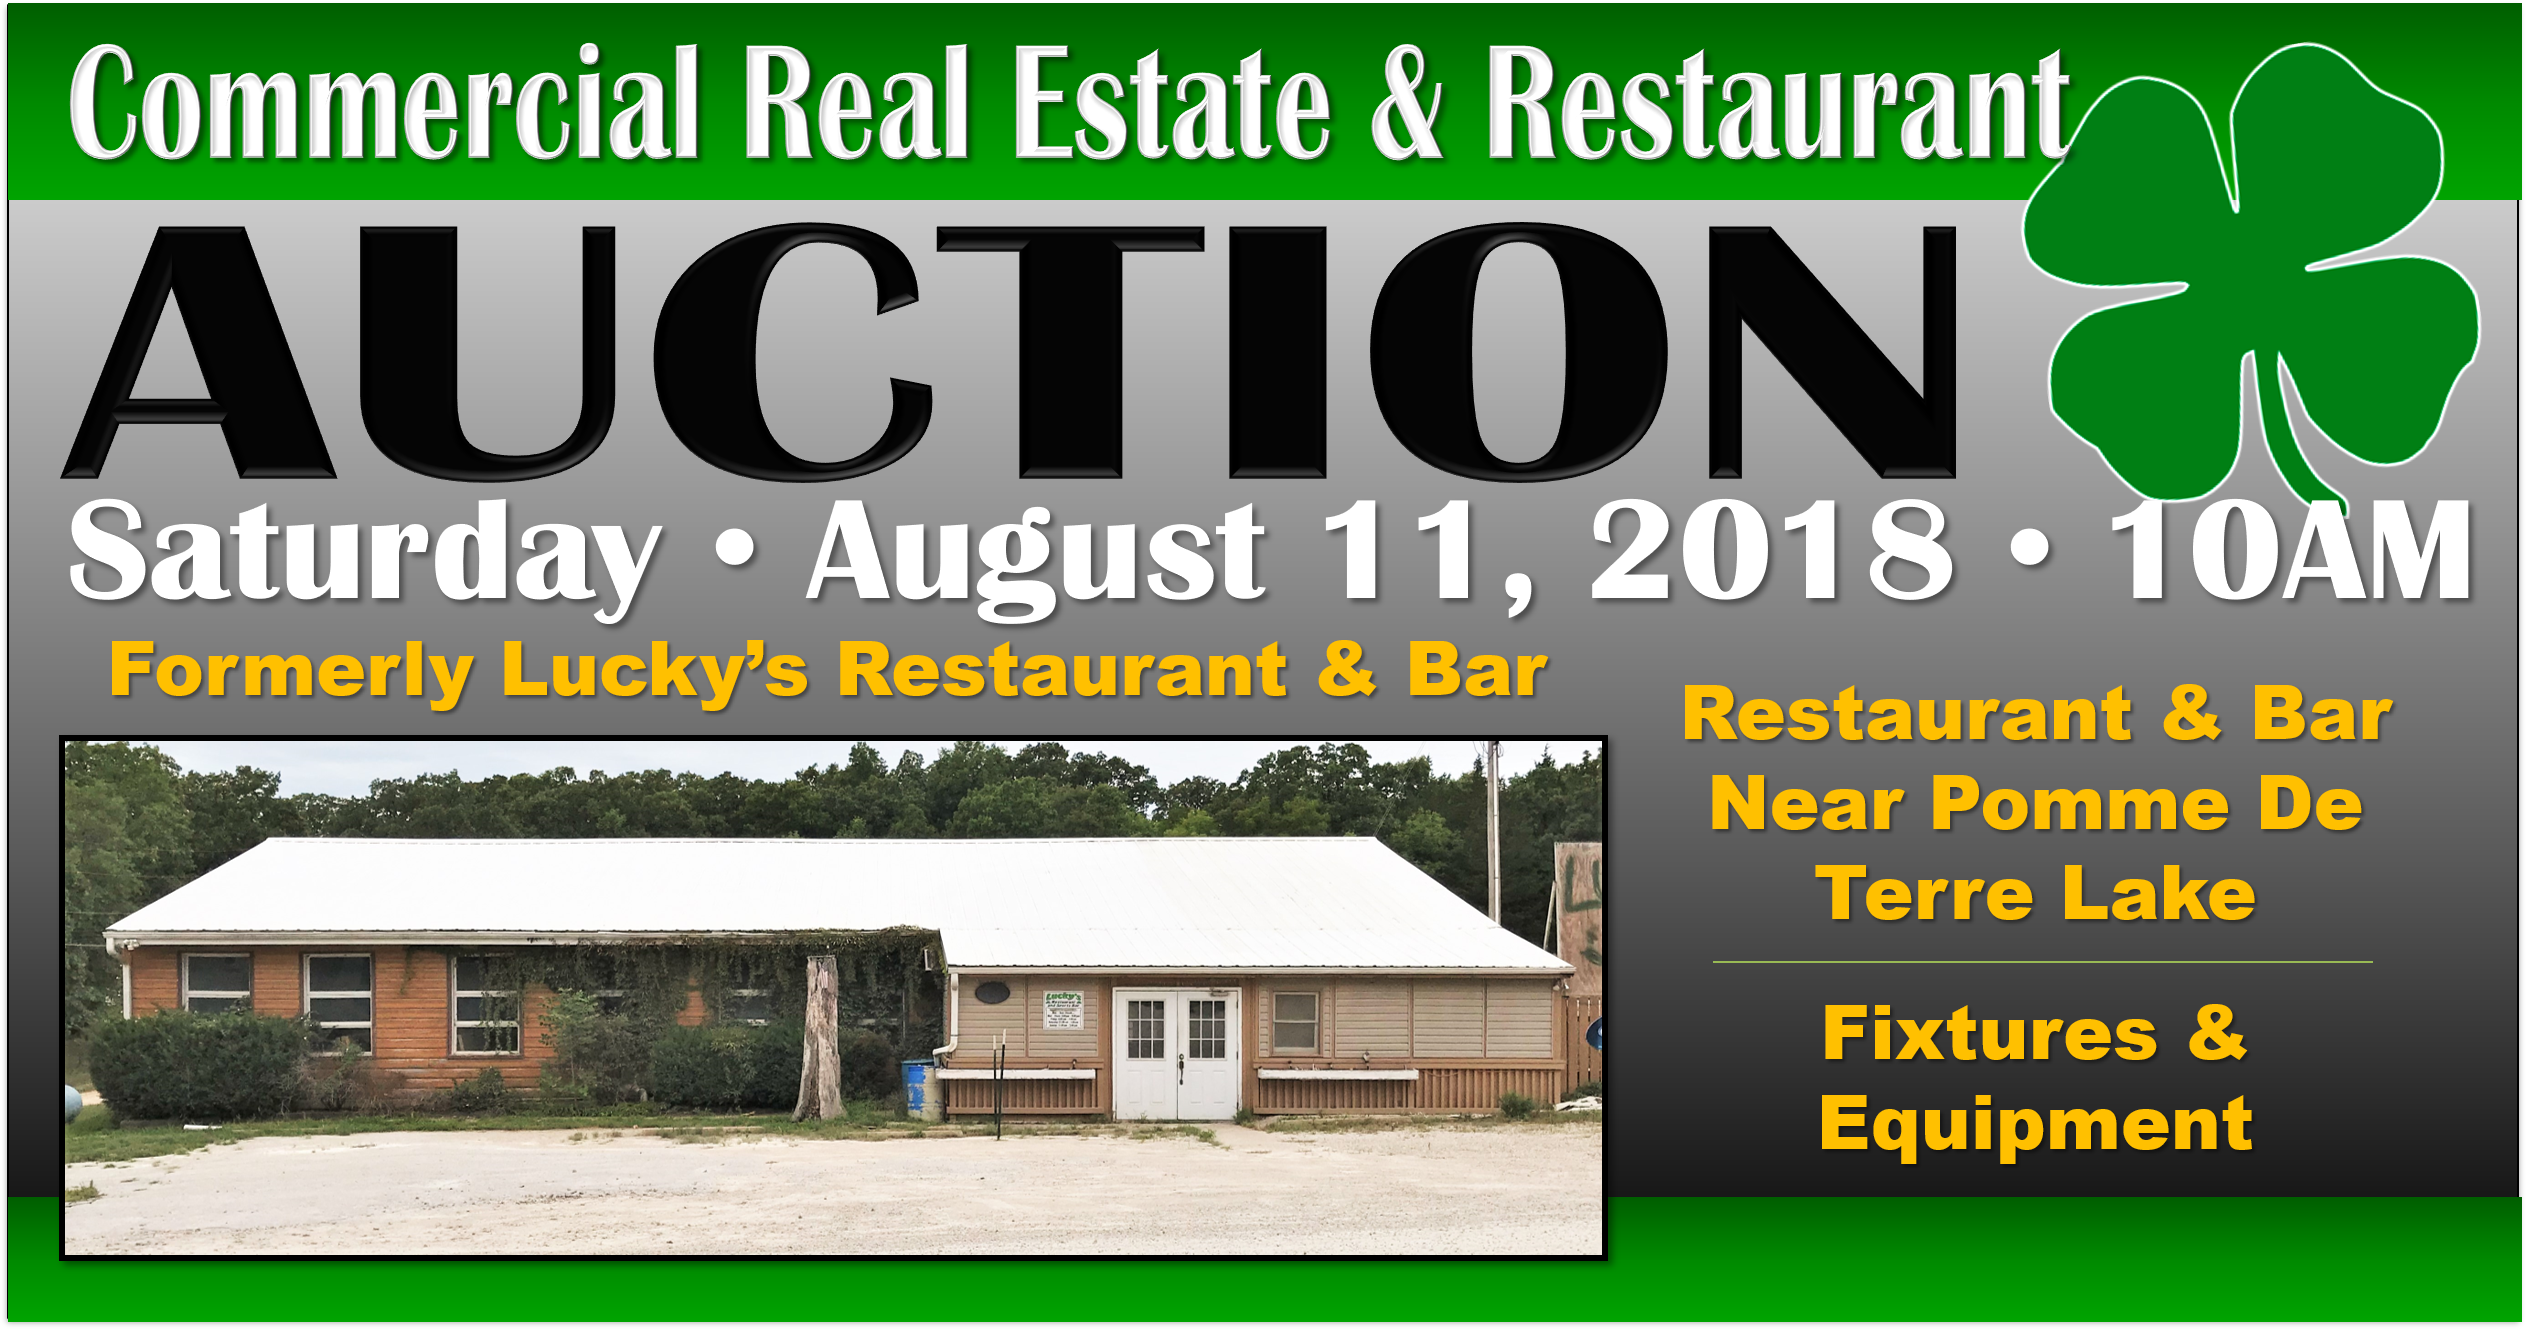 Commercial Real Estate & Restaurant Auction